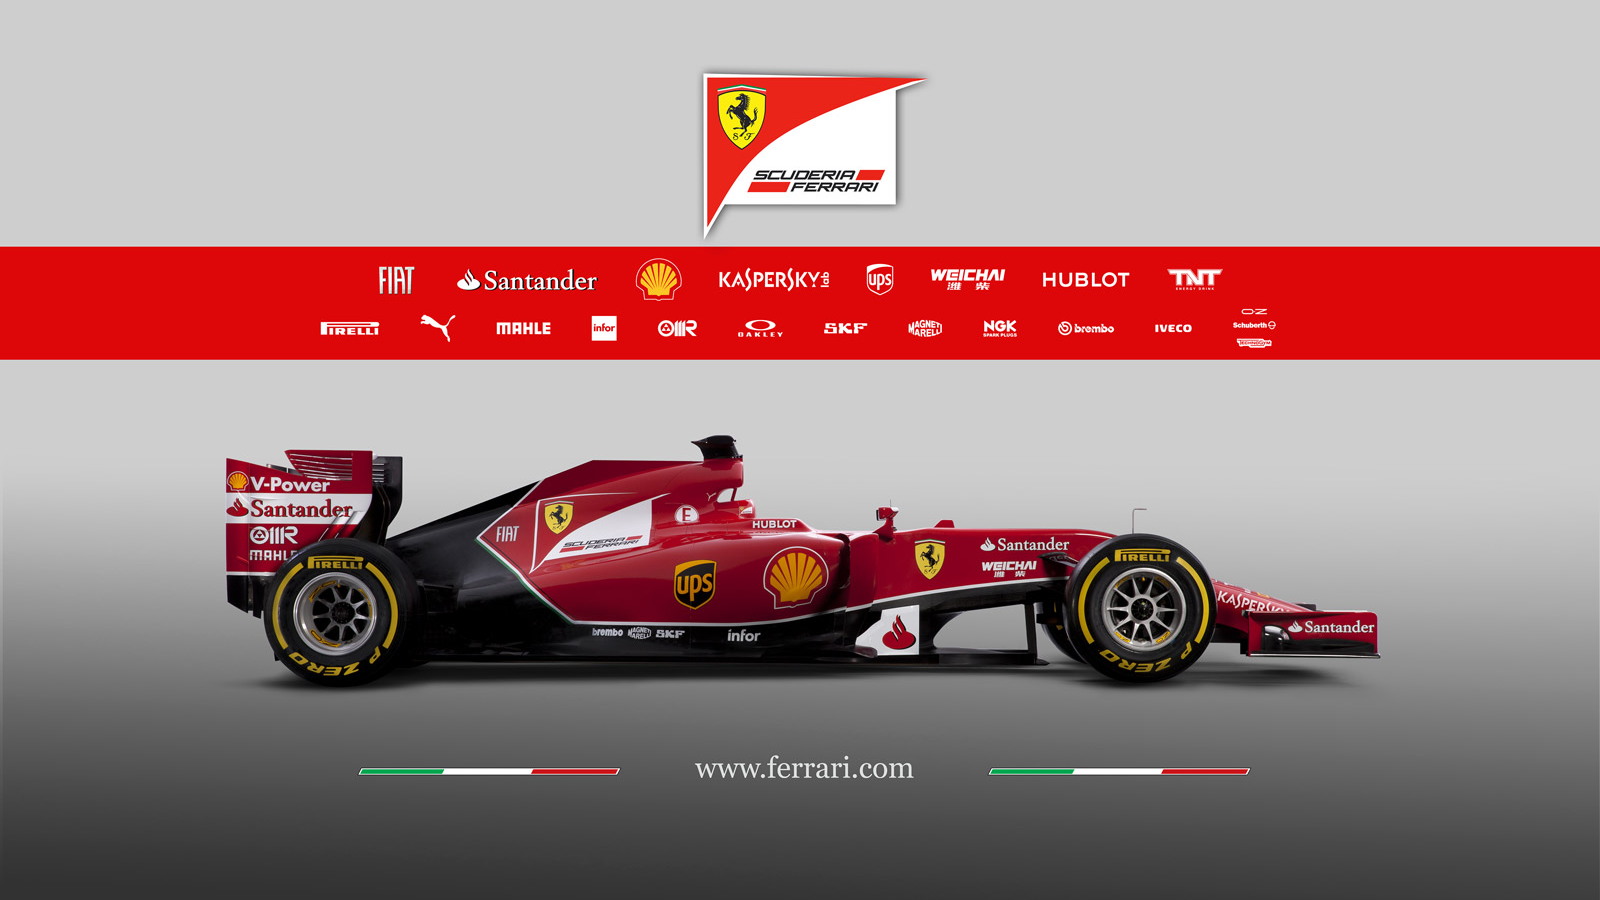 Ferrari's F14 T 2014 Formula One car